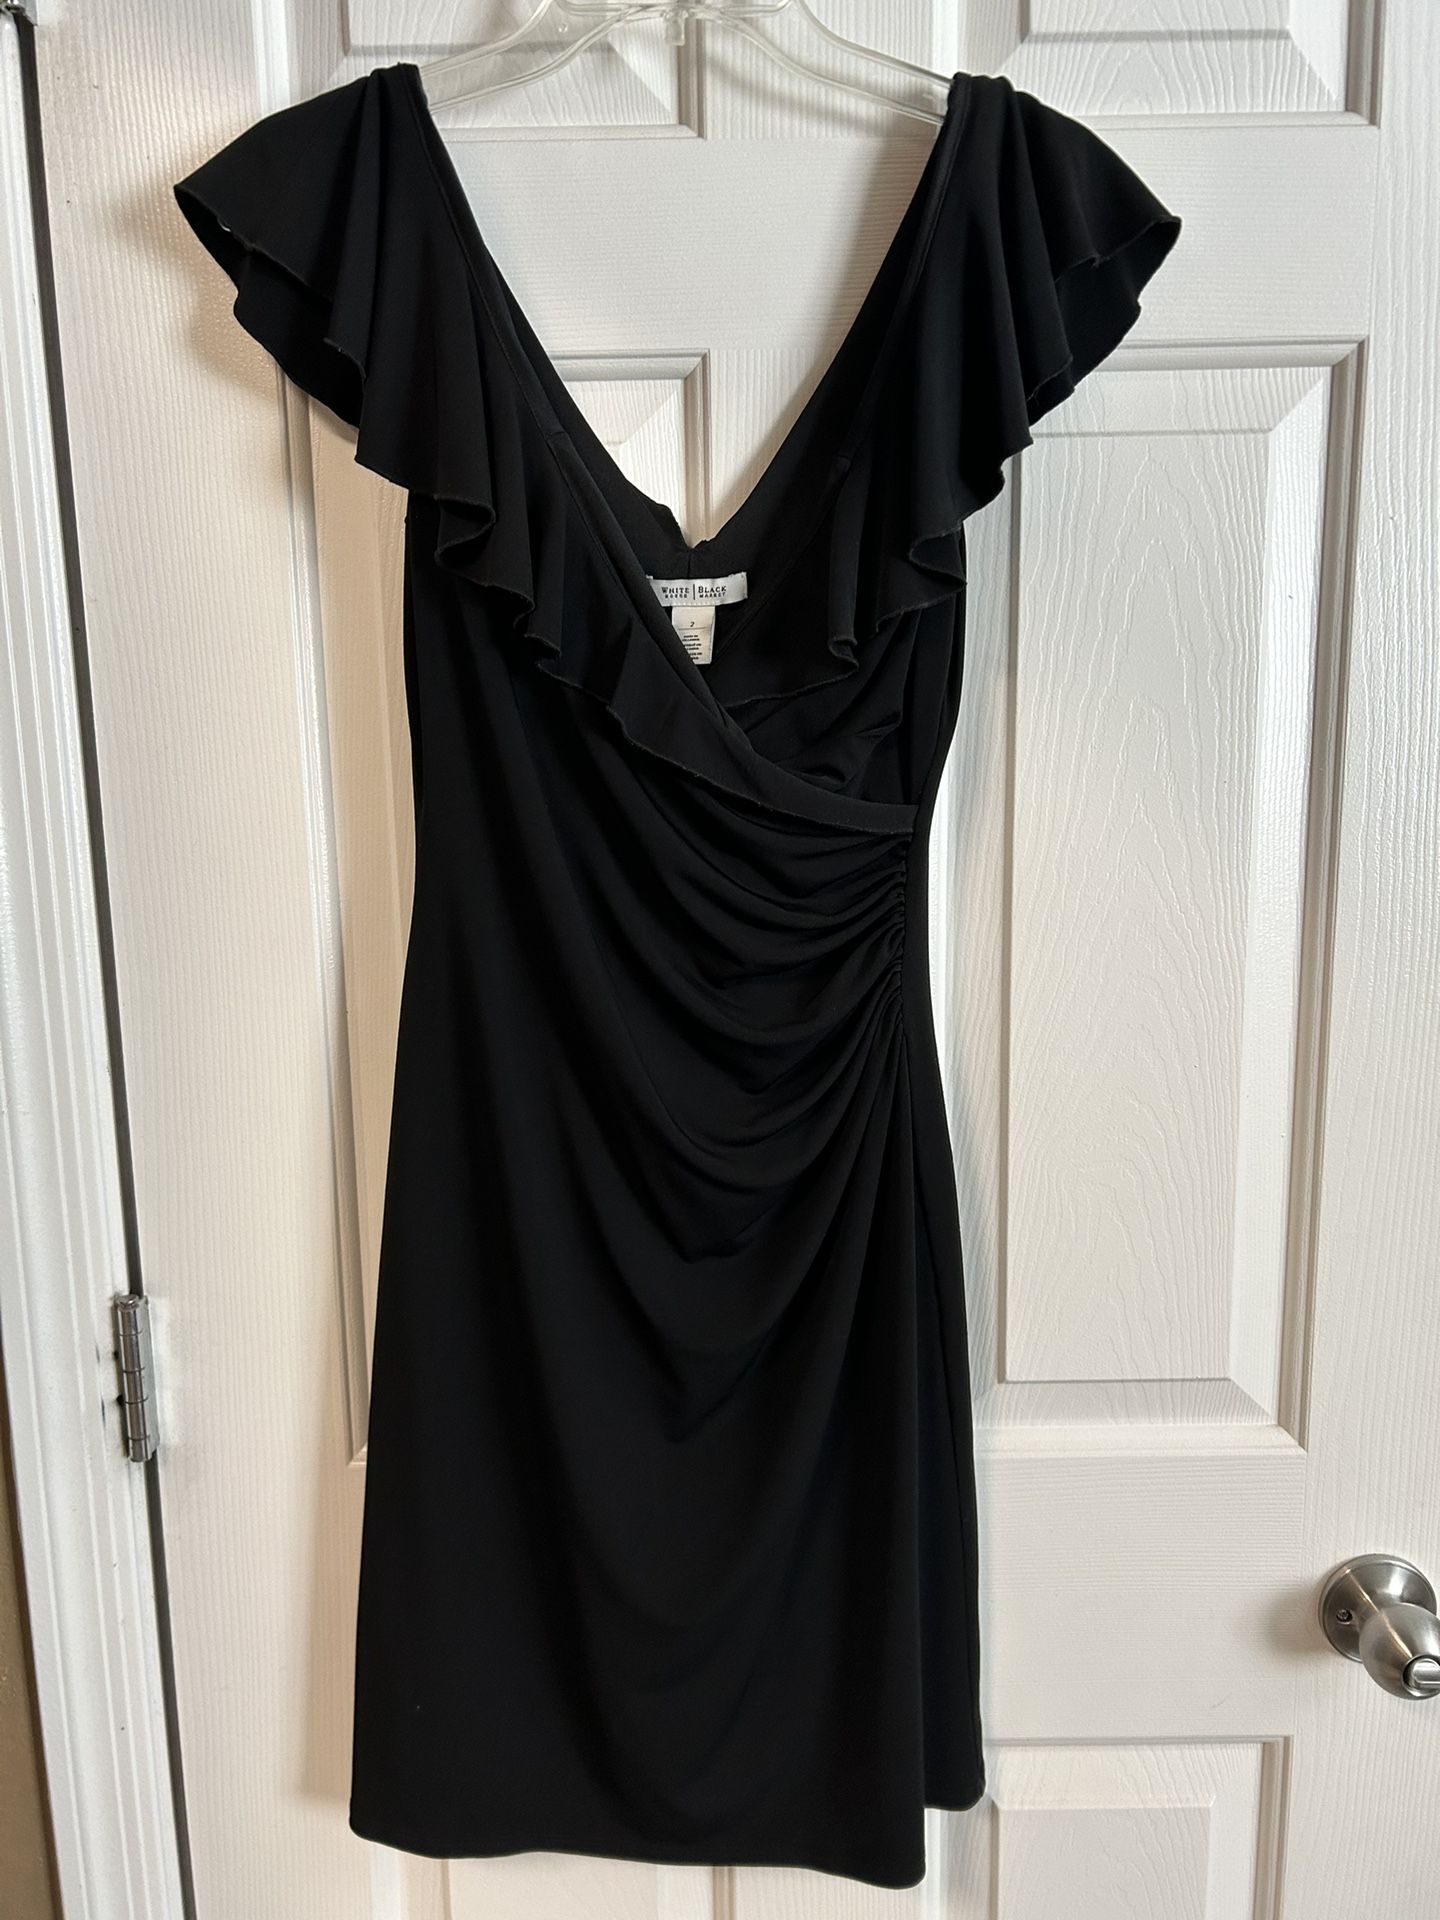 White House Black Market Dress